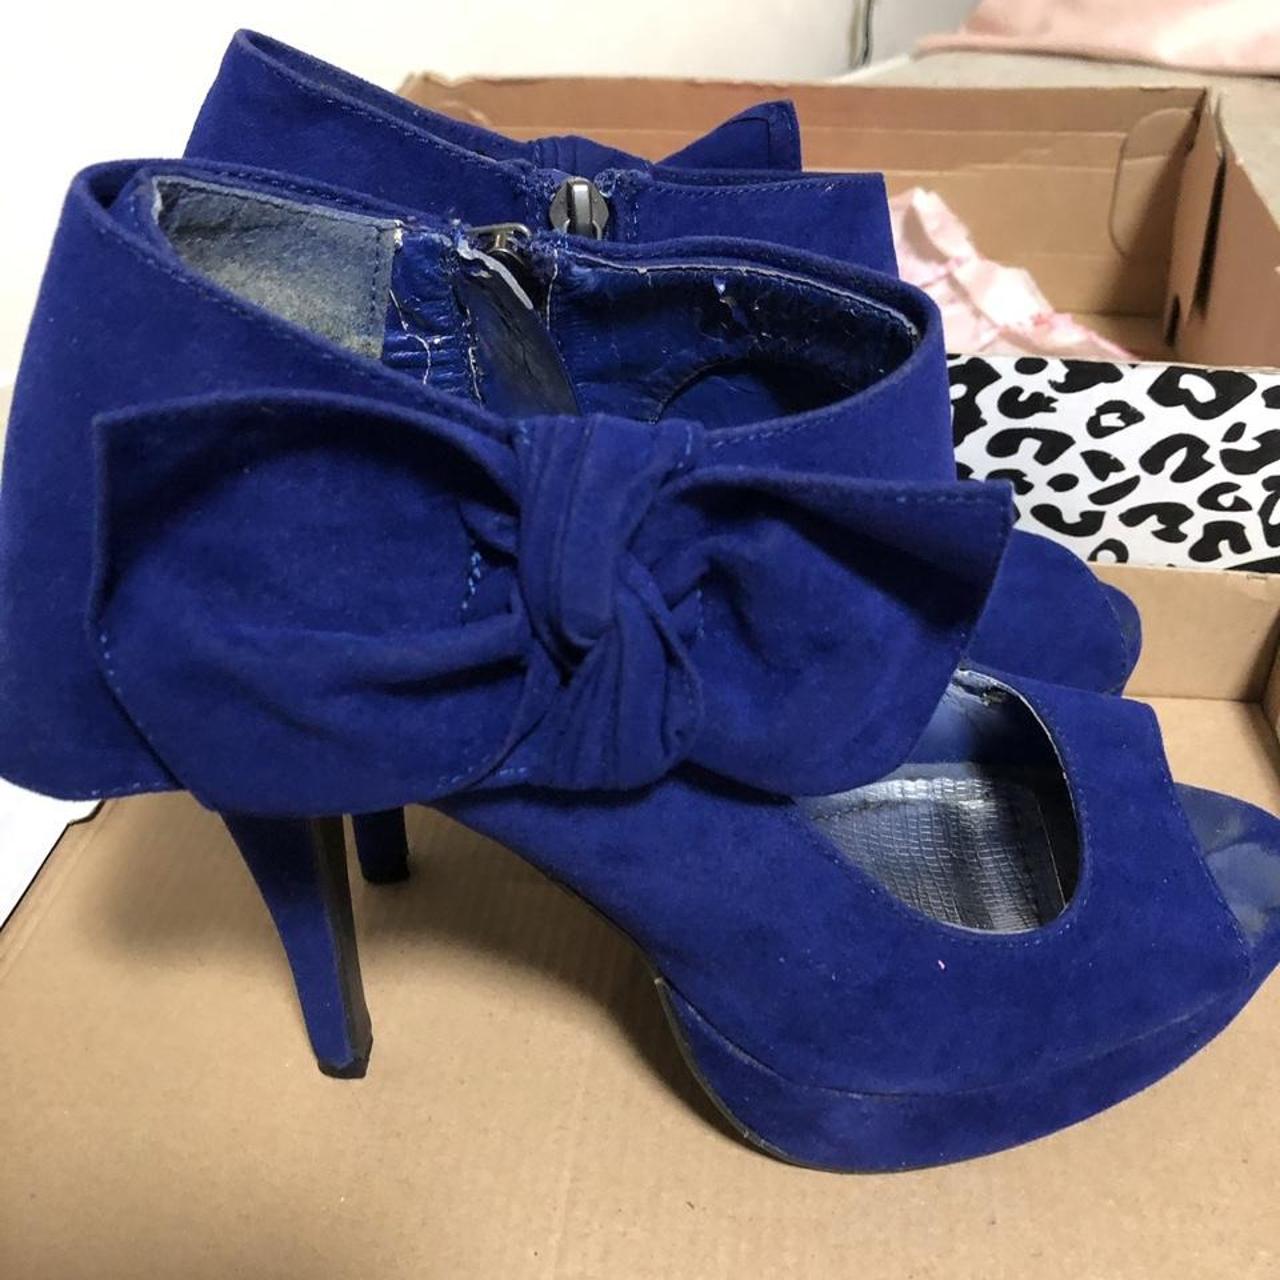 Product Image 4 - Royal blue bow platform heels